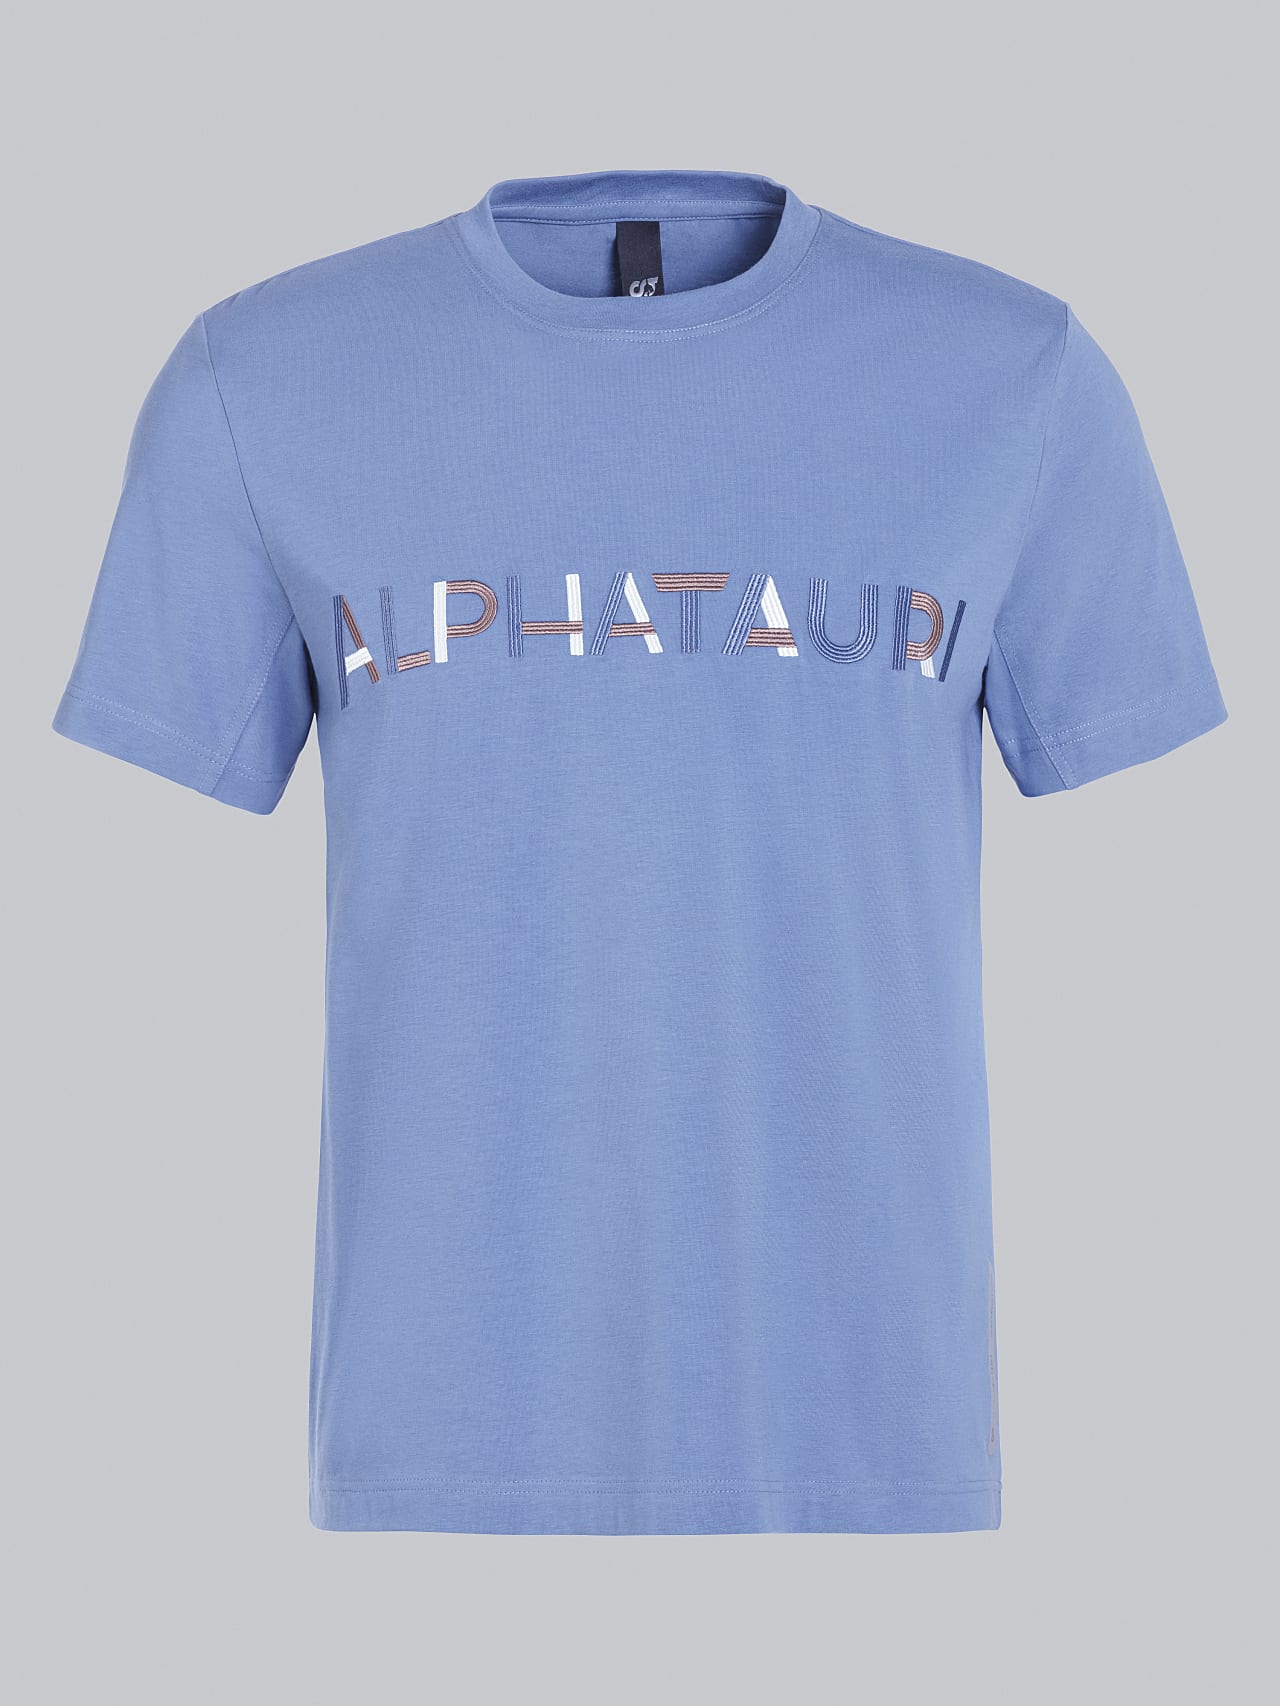 AlphaTauri | JANOS V3.Y5.02 | Logo Embroidery T-Shirt in light blue for Men